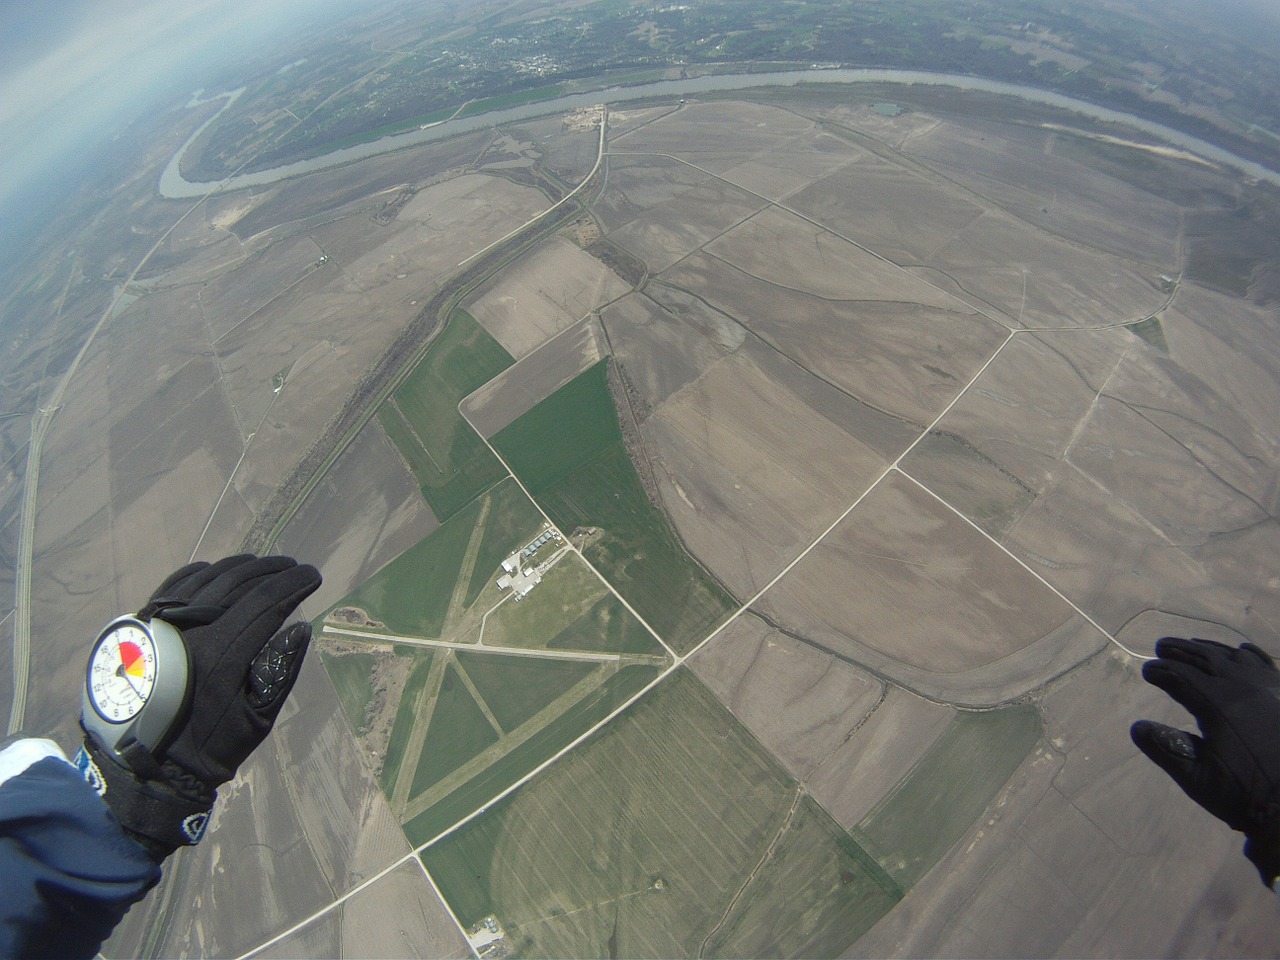 altitude altimeter skydiving free photo